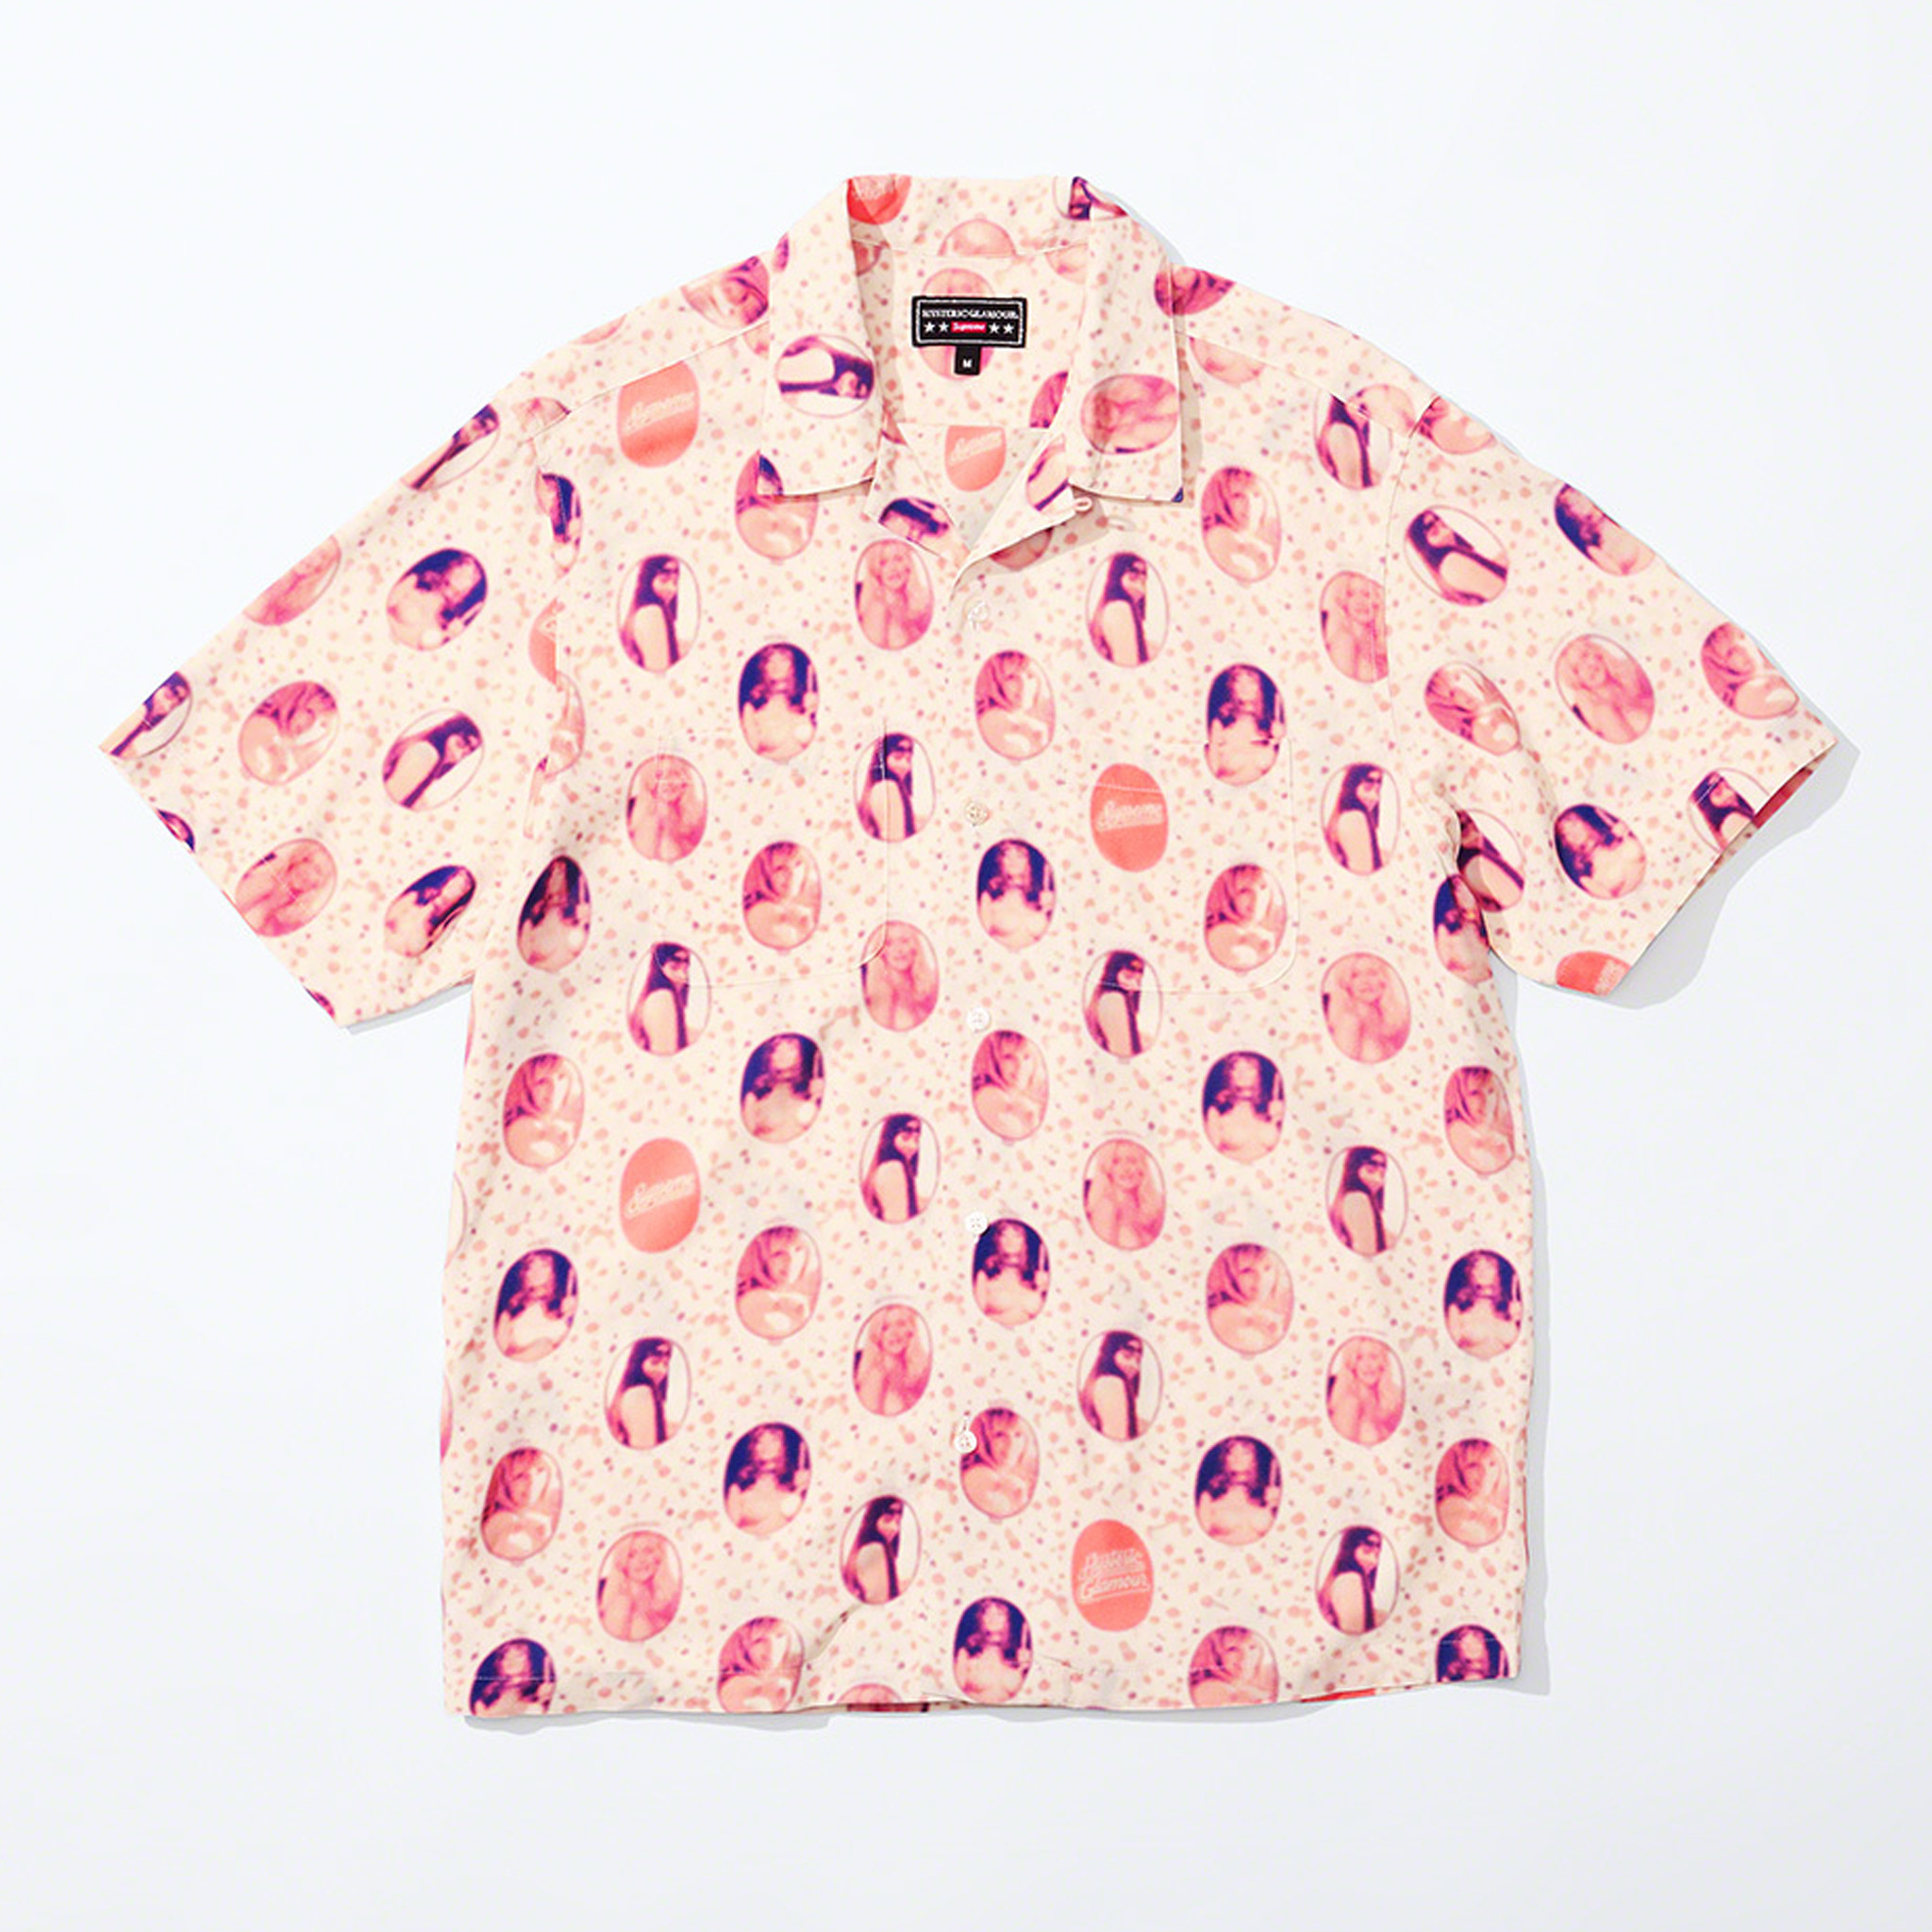 Supreme Hysteric Glamour Blurred Girls Rayon S/S Shirt | Supreme